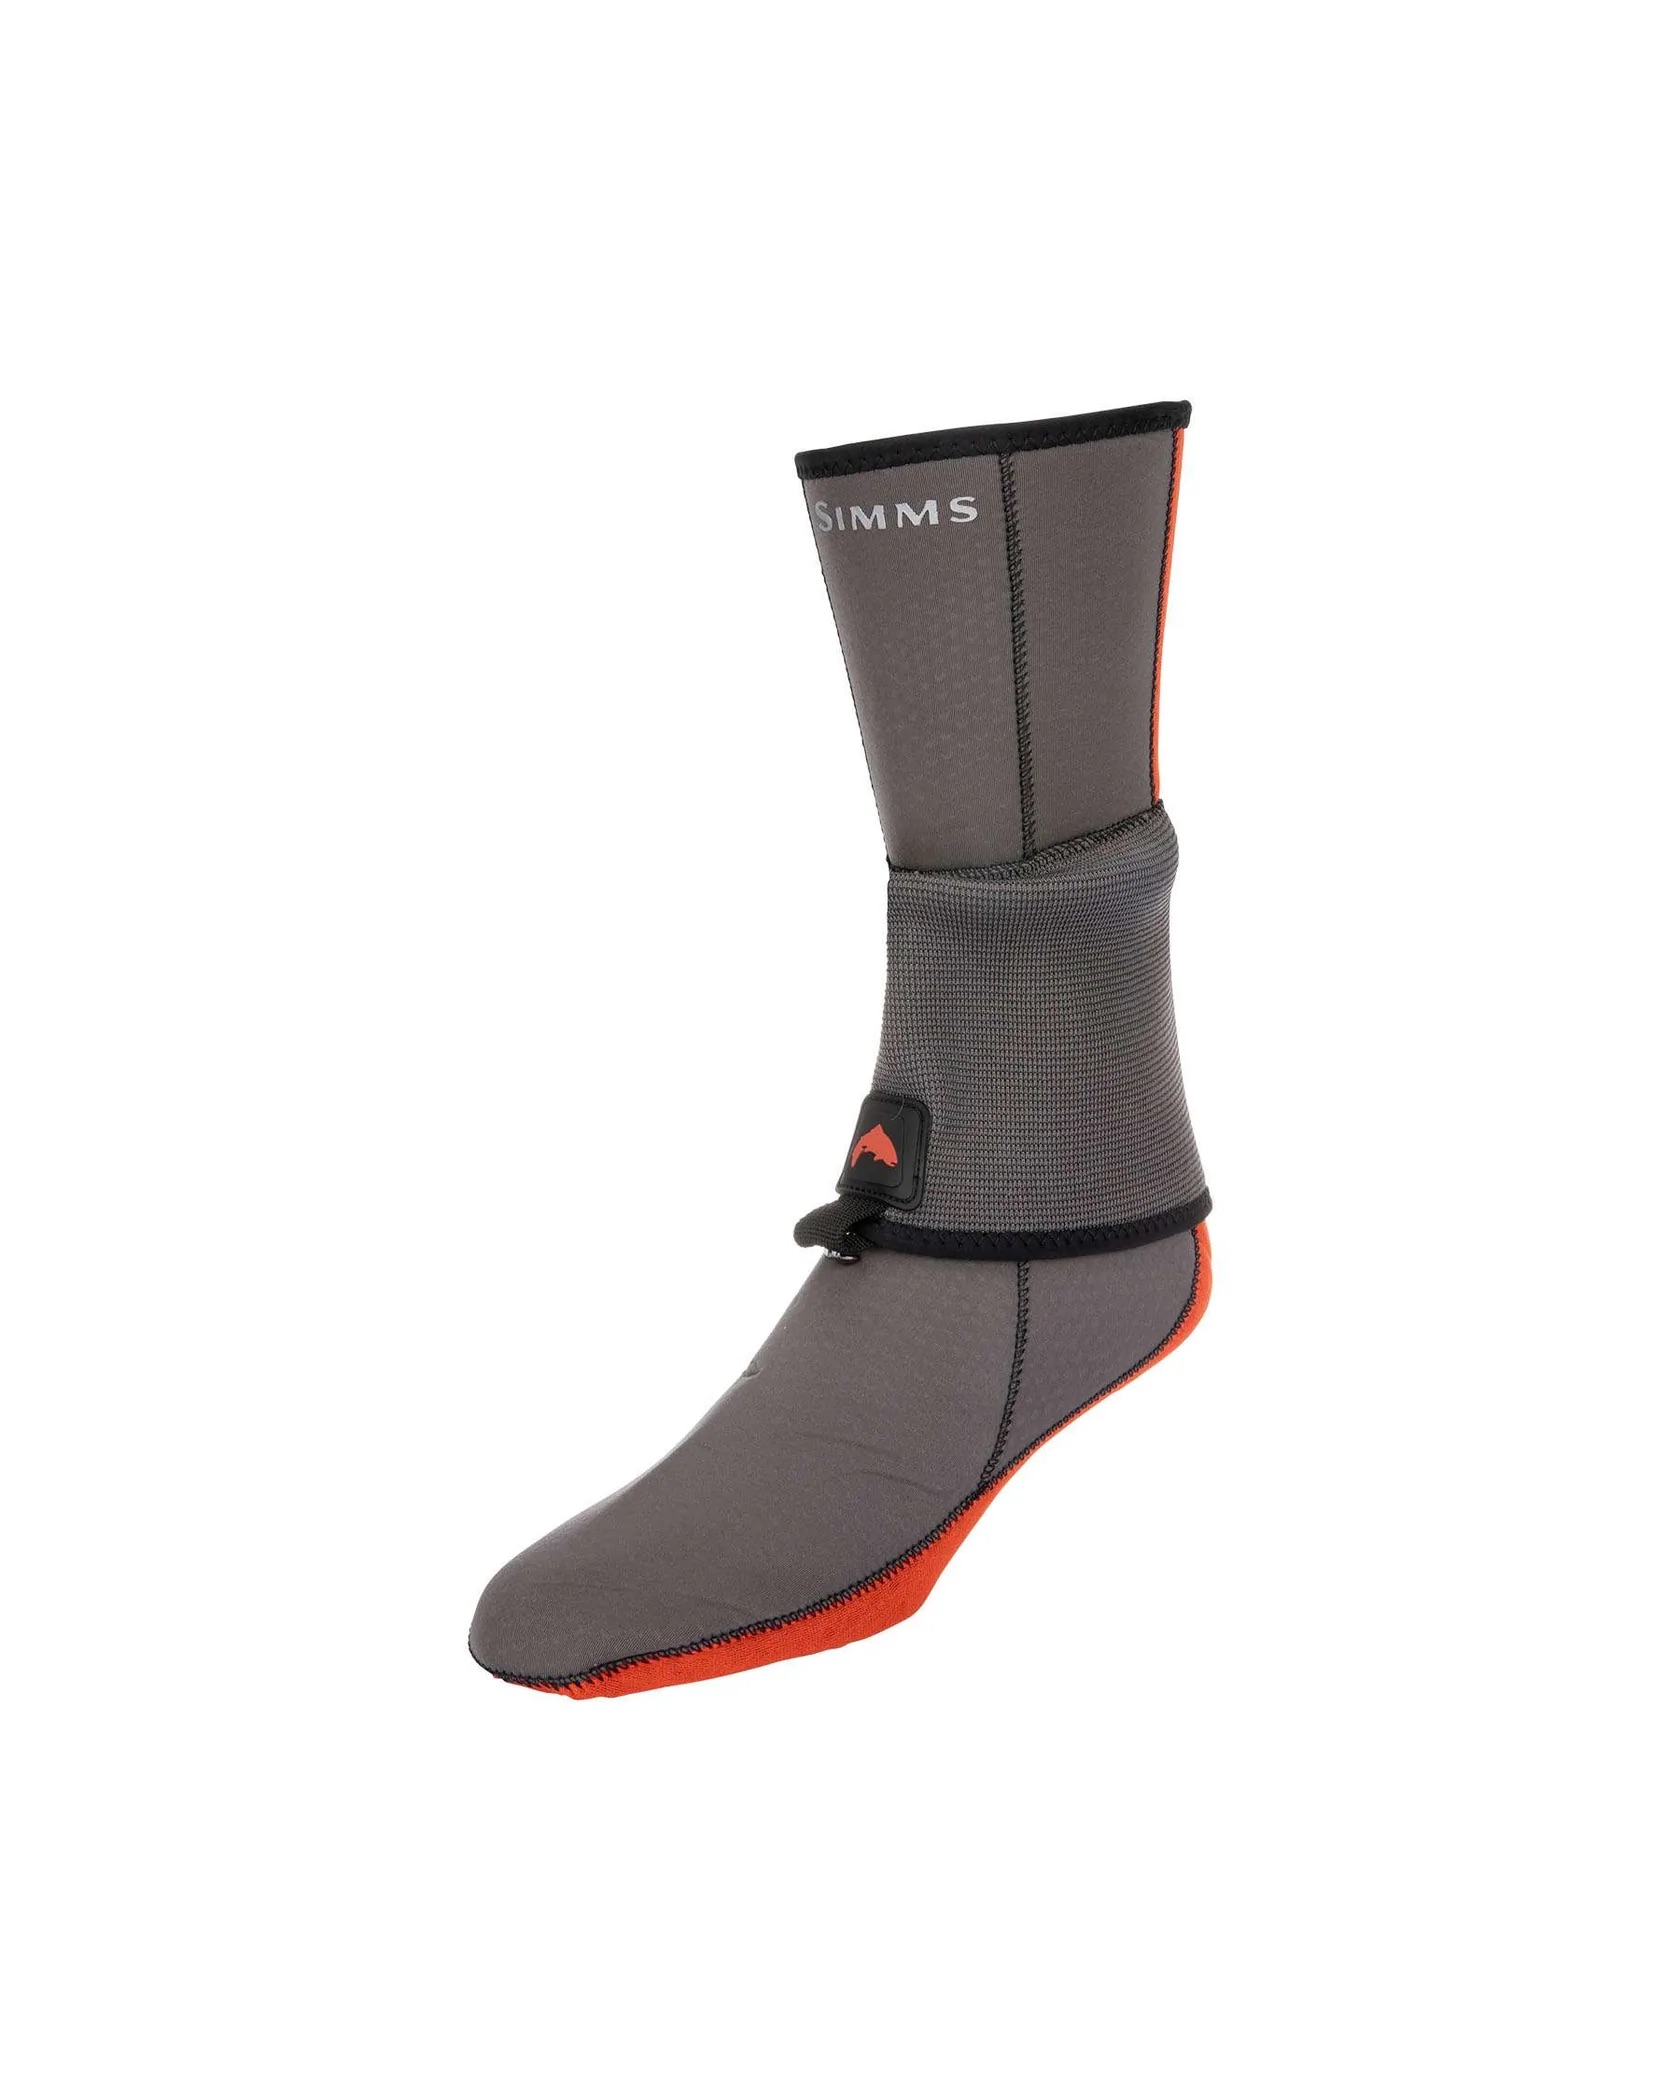 Simms M's Neoprene Flyweight Wading Sock - Small